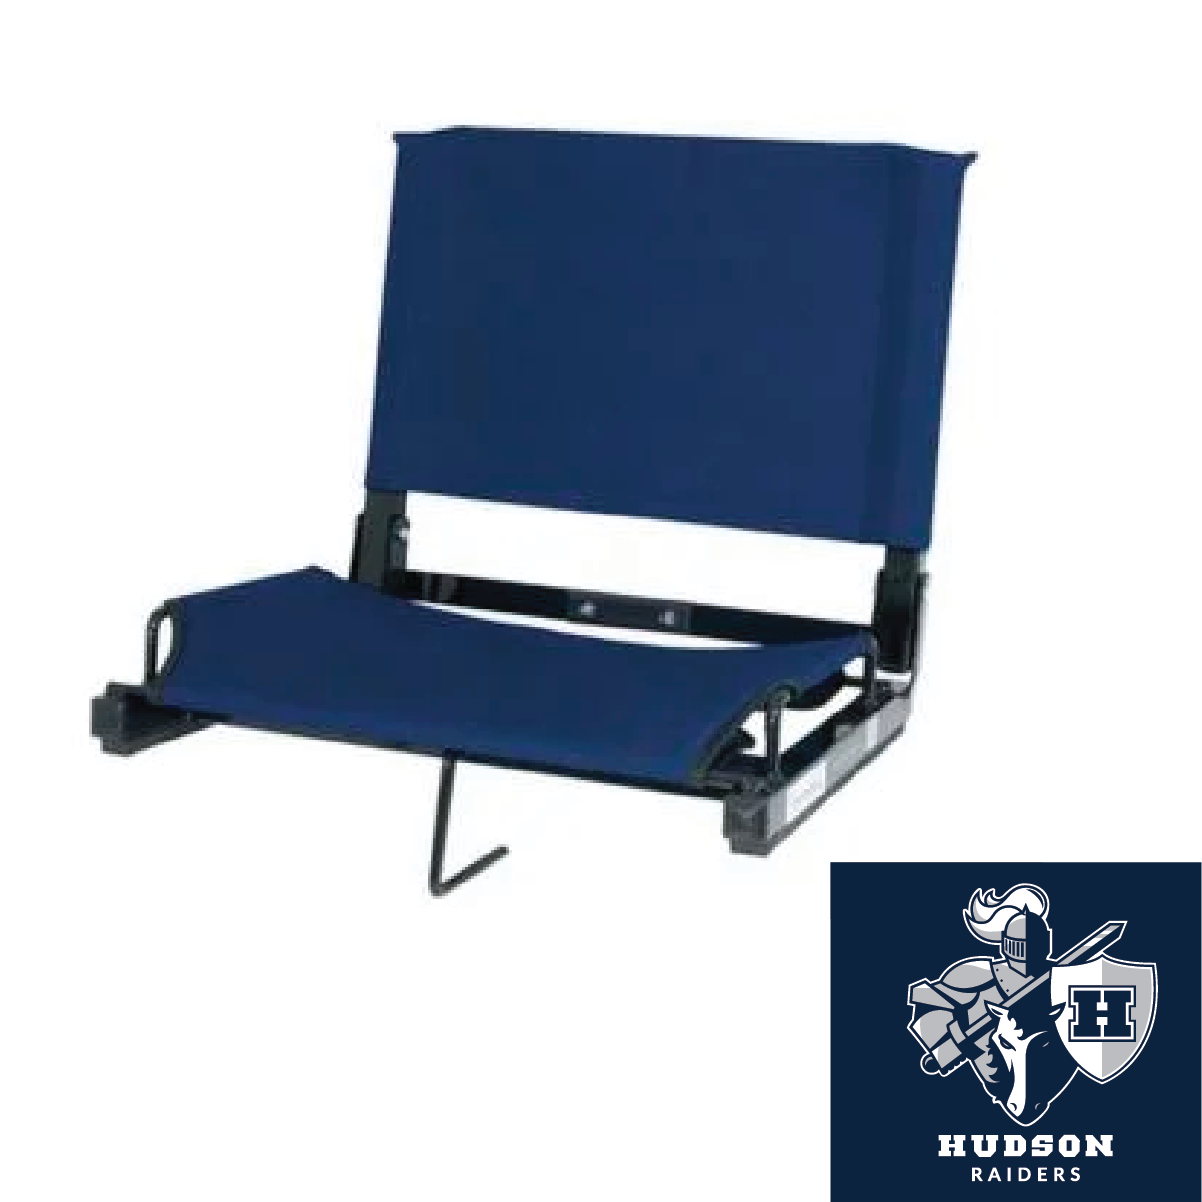 Hudson Raiders Online Bleacher Chair - Regular